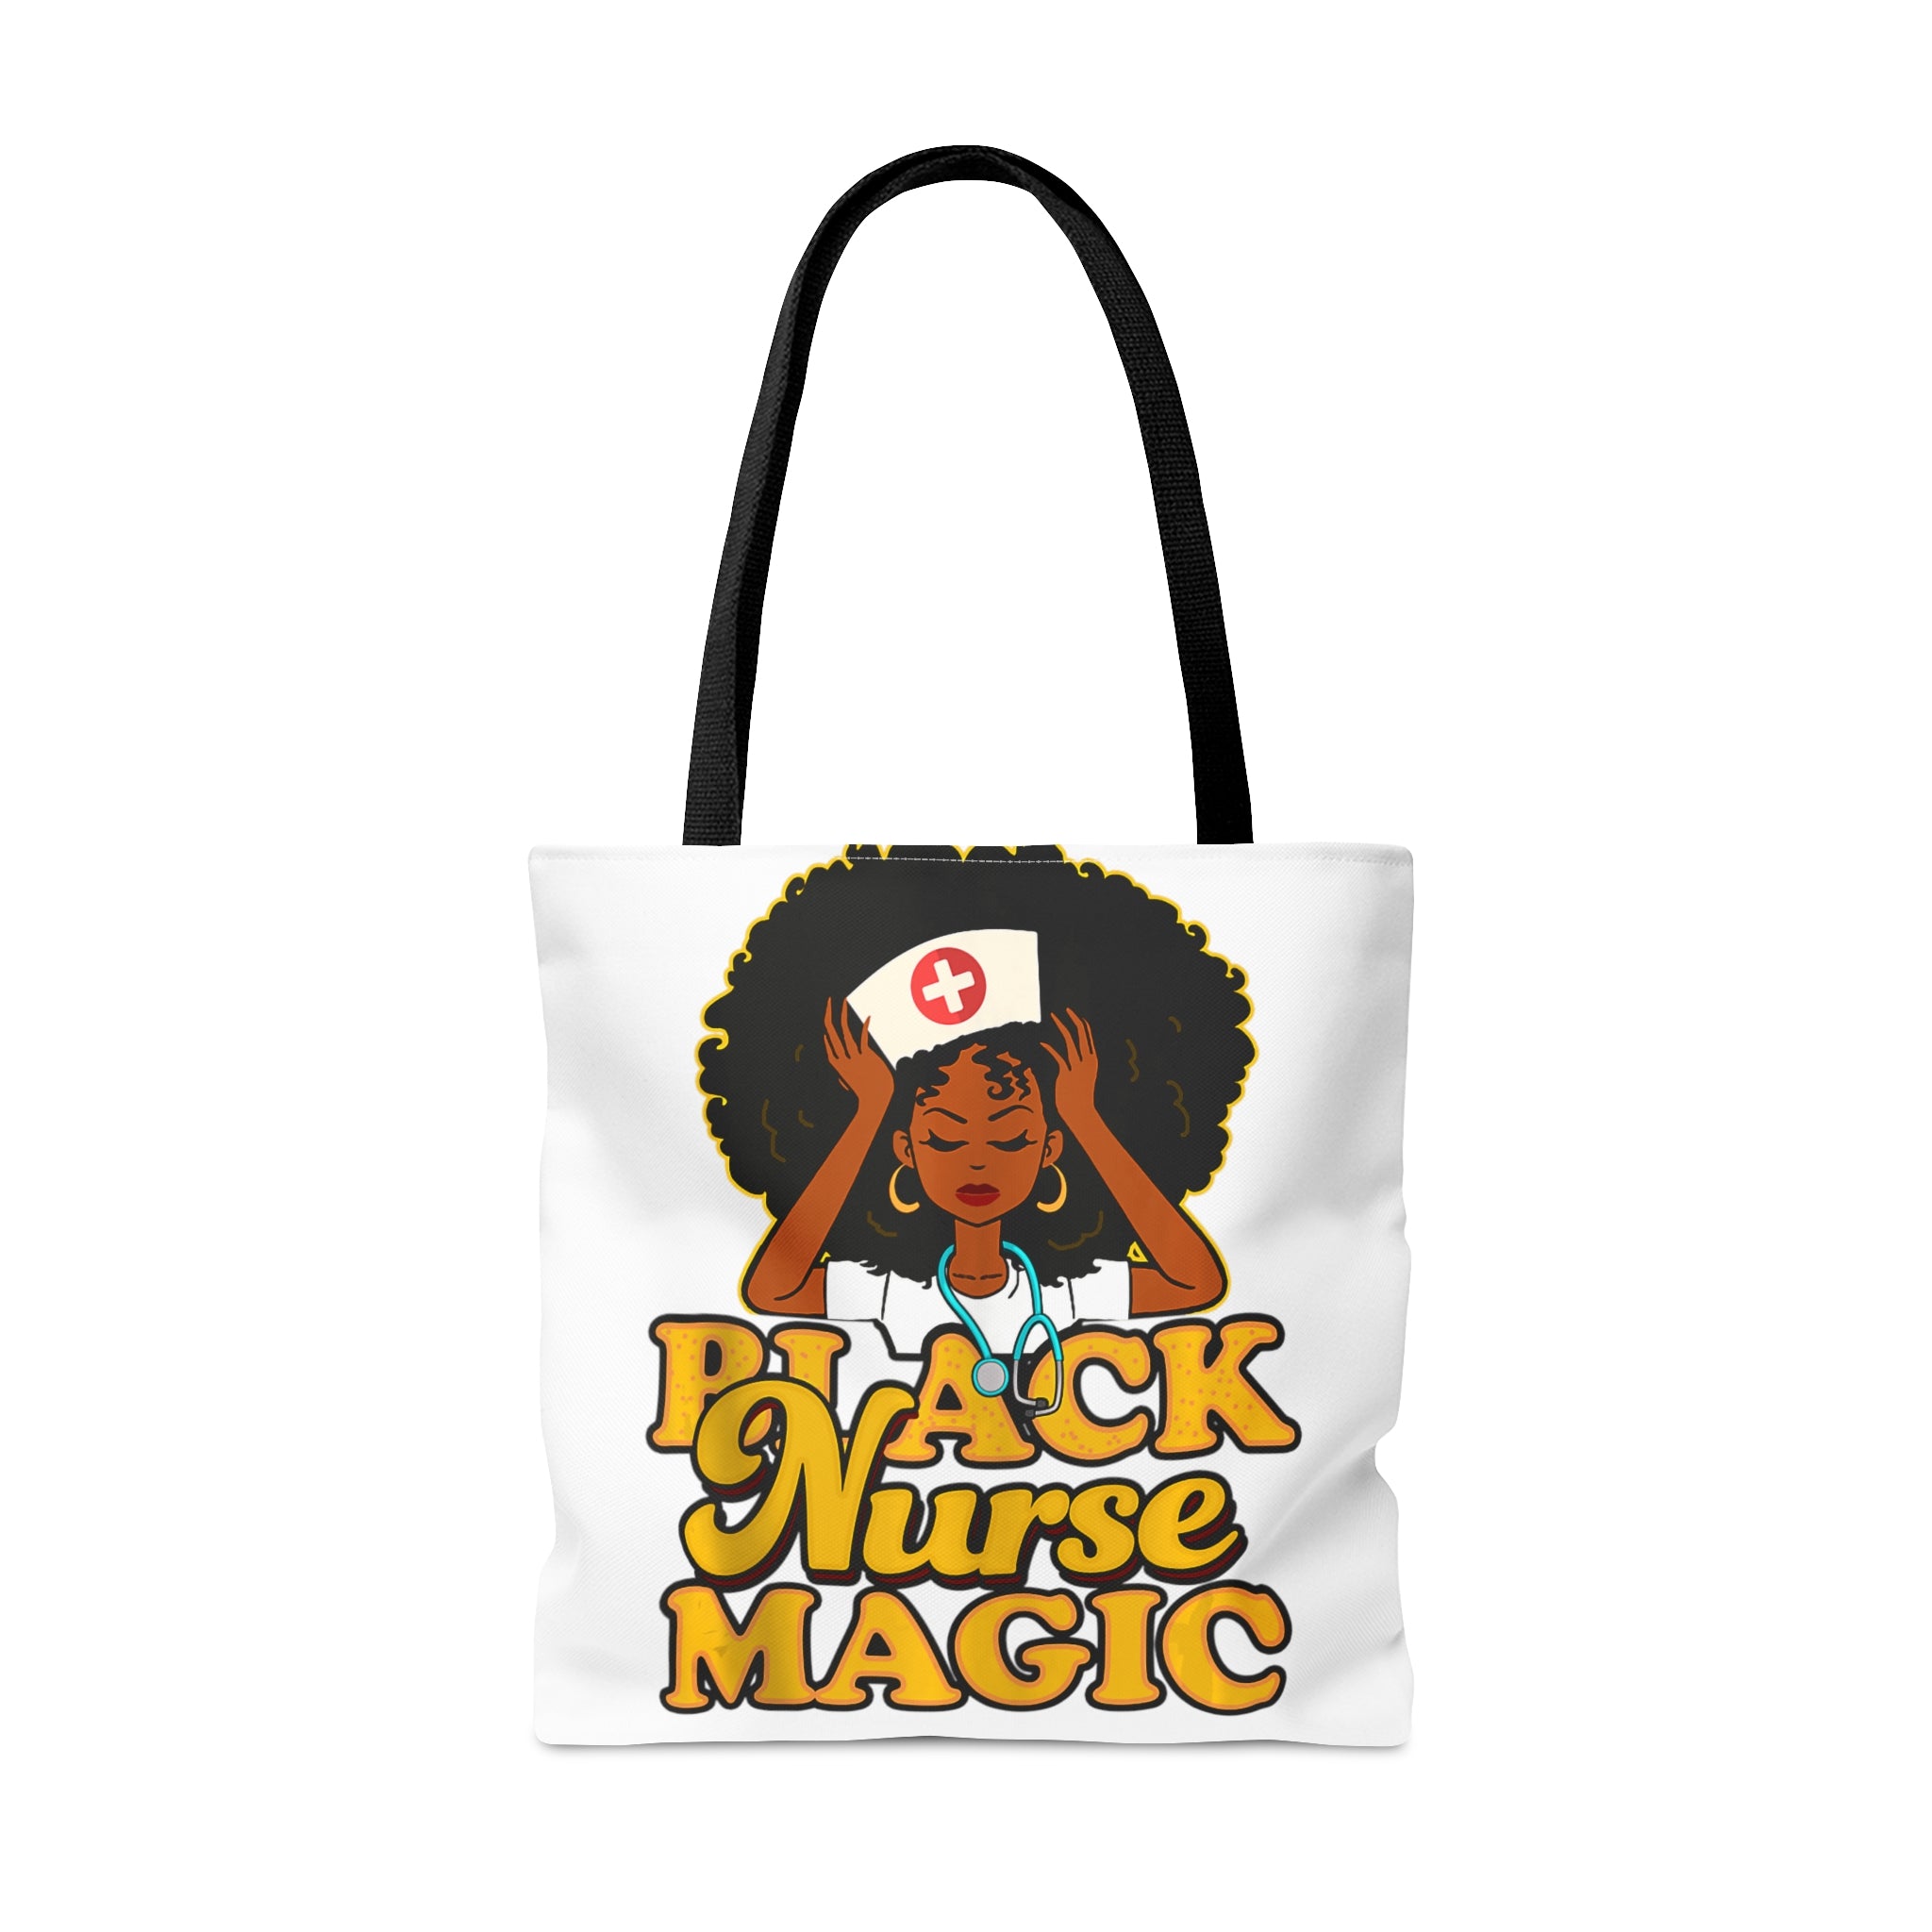 Black Nurse Magic Tote Bag